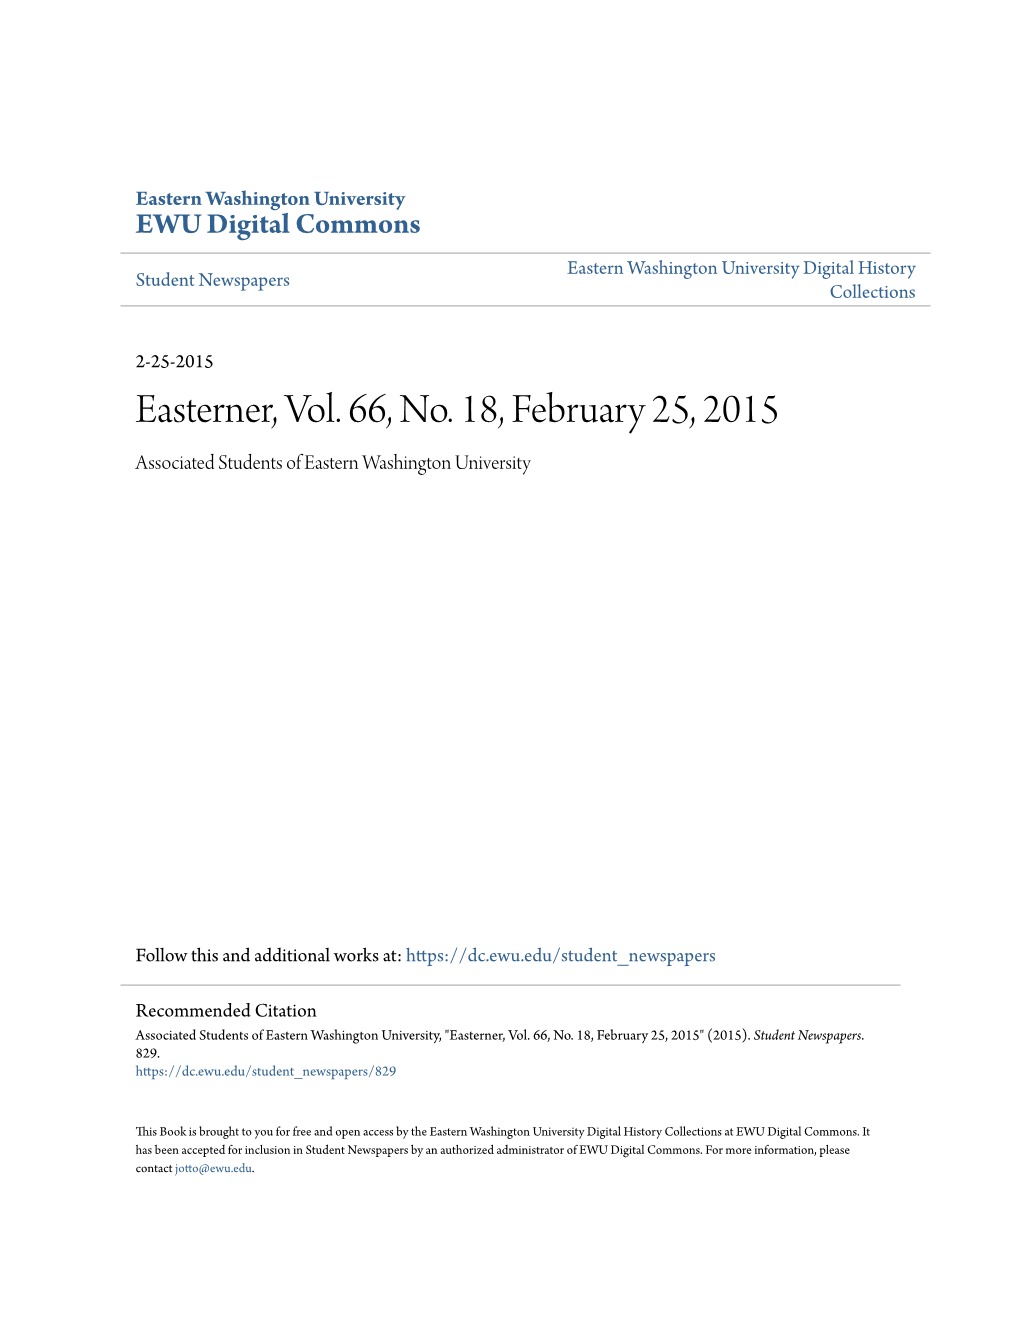 Easterner, Vol. 66, No. 18, February 25, 2015 Associated Students of Eastern Washington University